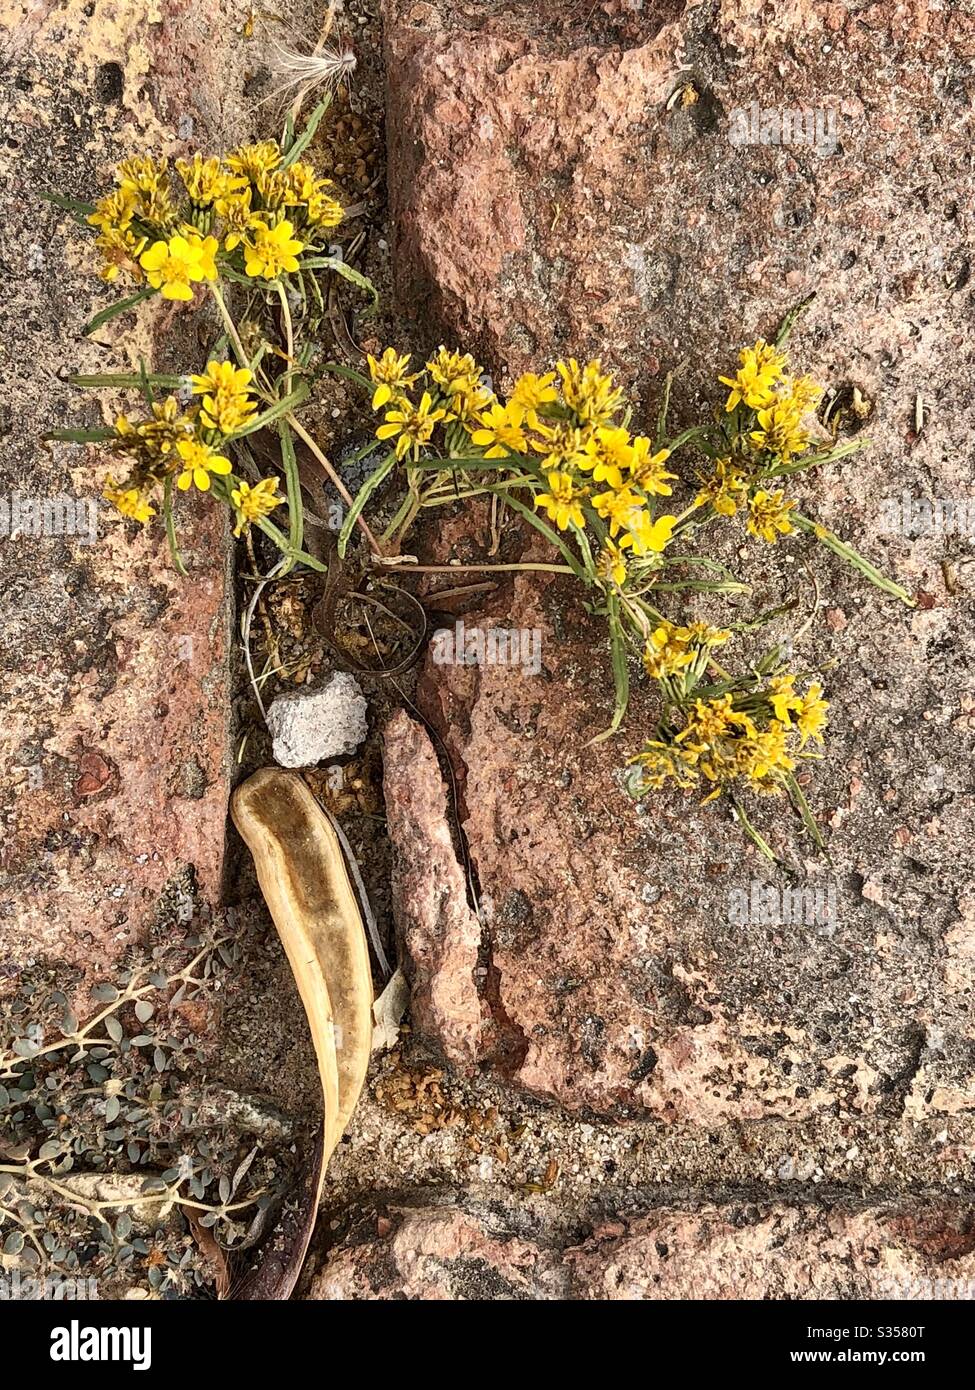 Tiny plants, growing between bricks, yellow flowers, weeds, tiny green plant, textures, tiny life, nature, natural, survival, downward angle, closeup Stock Photo